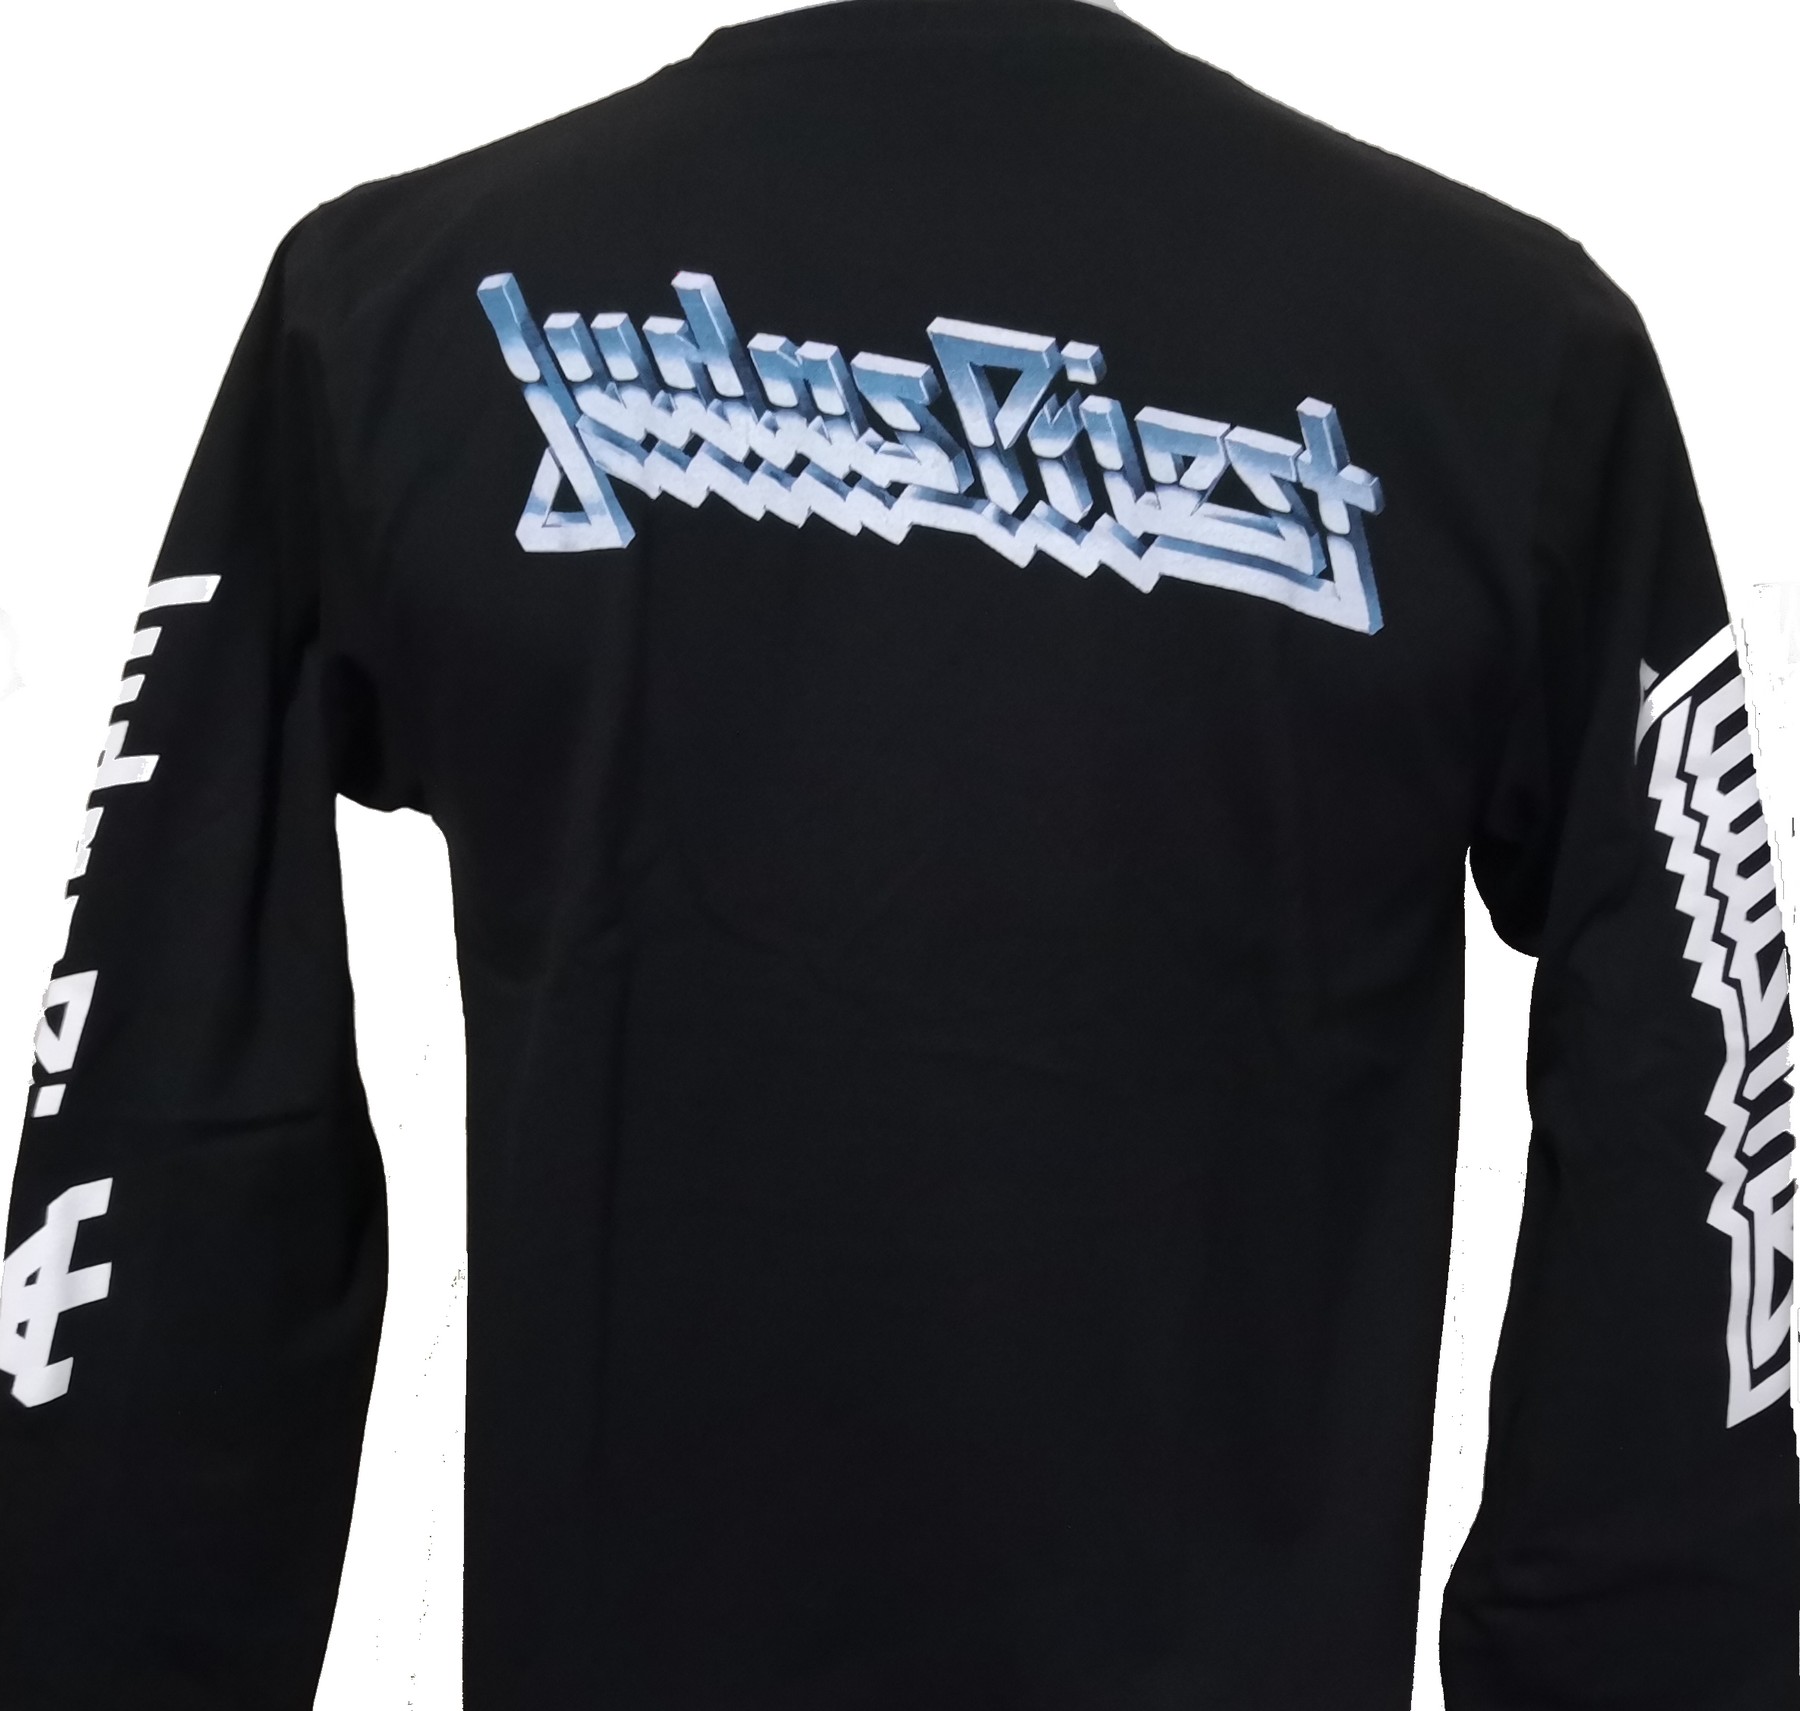 Judas Priest long-sleeved t-shirt British Steel size XXXL – RoxxBKK